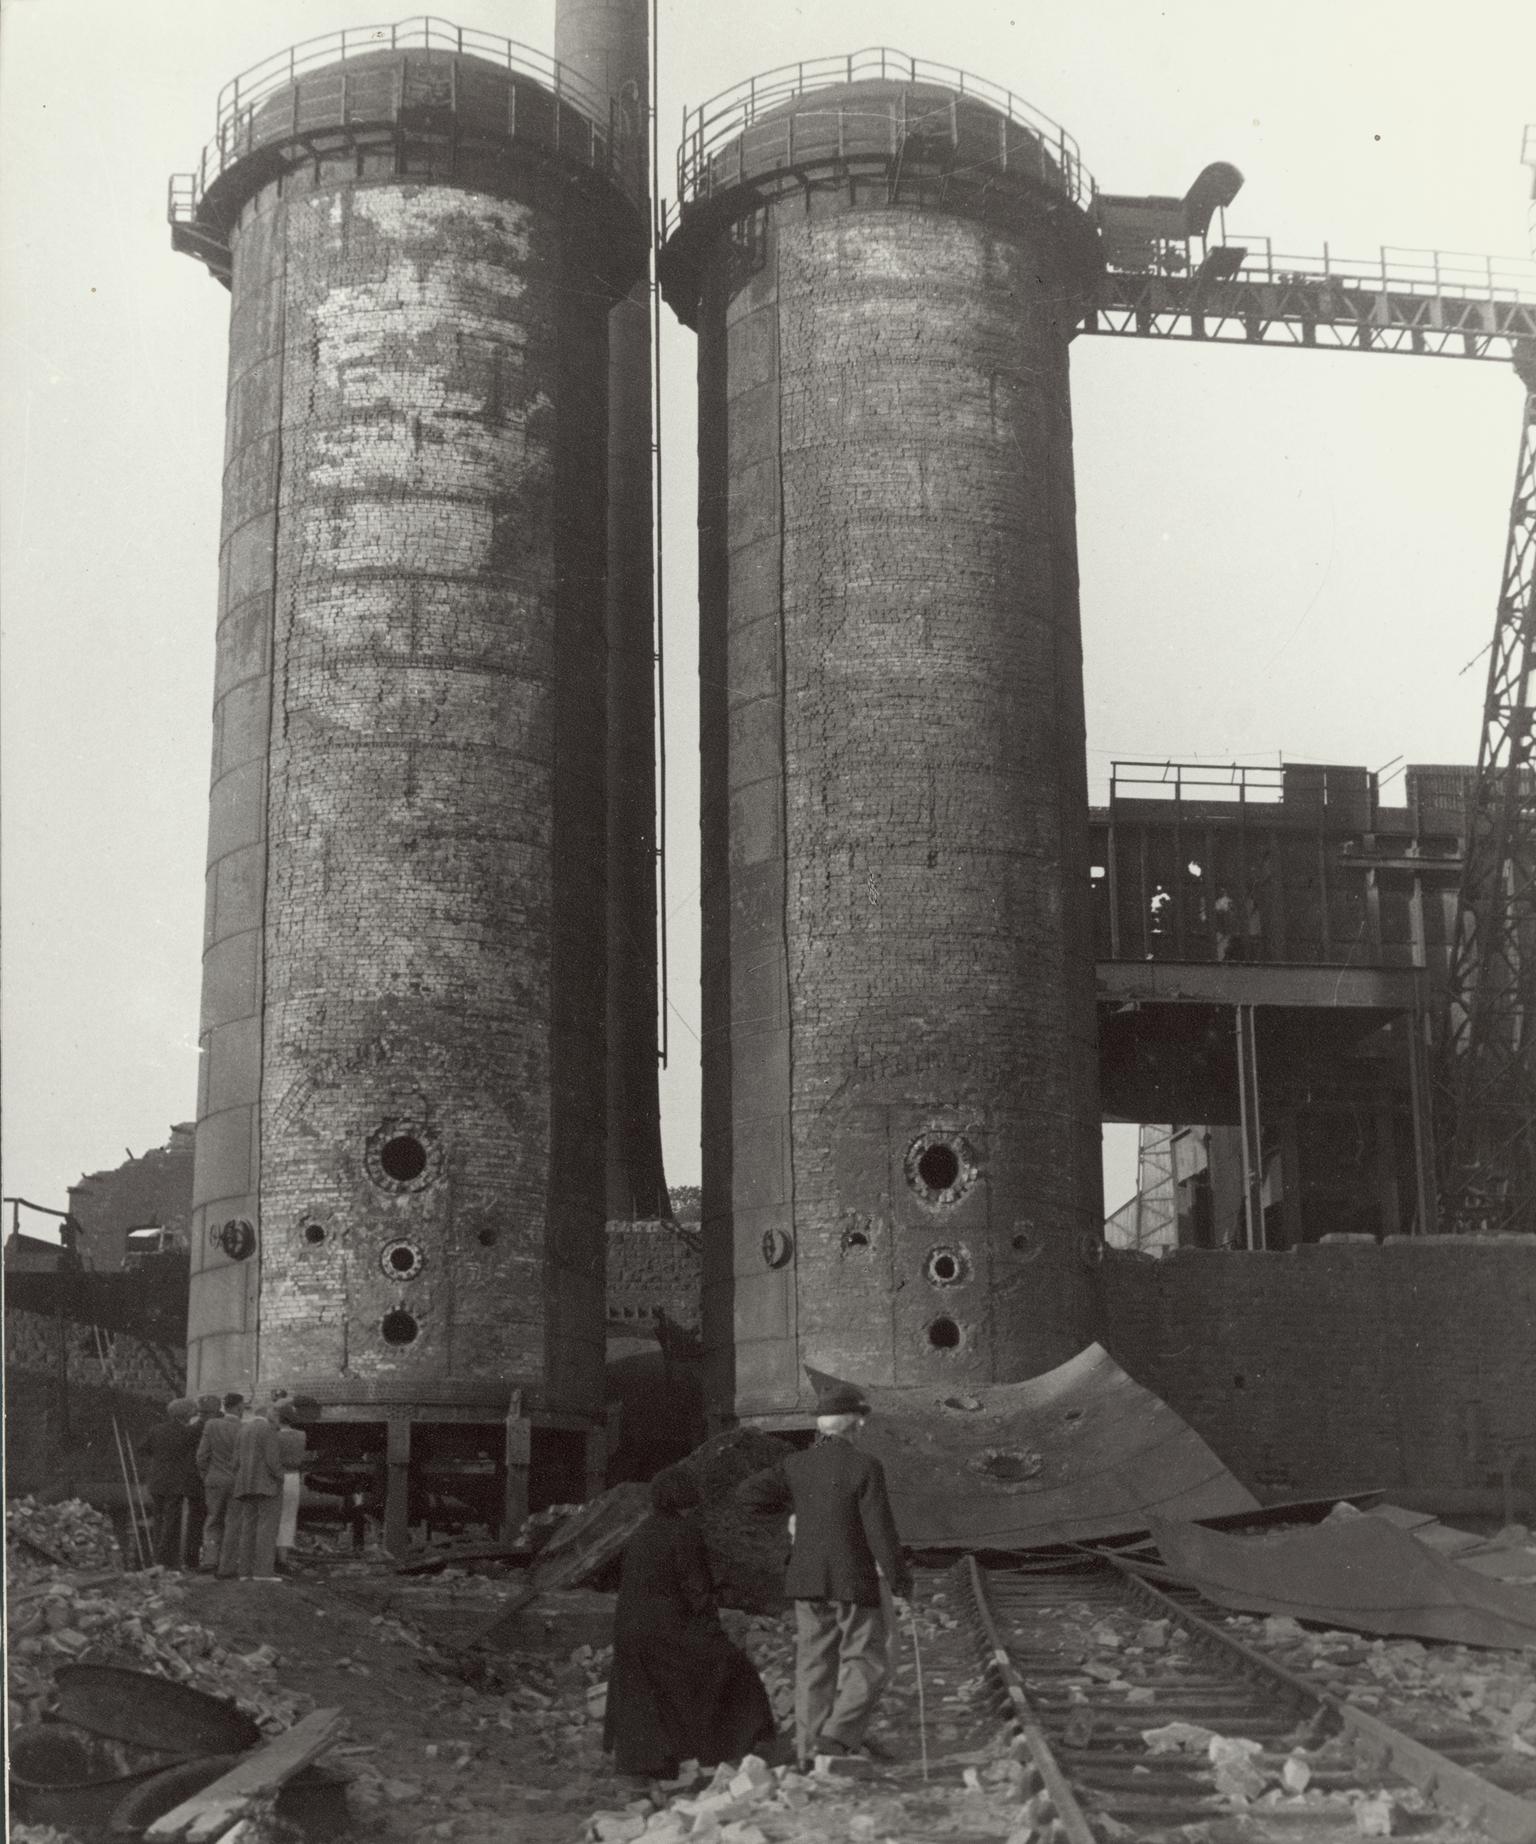 Dowlais steelworks, photograph